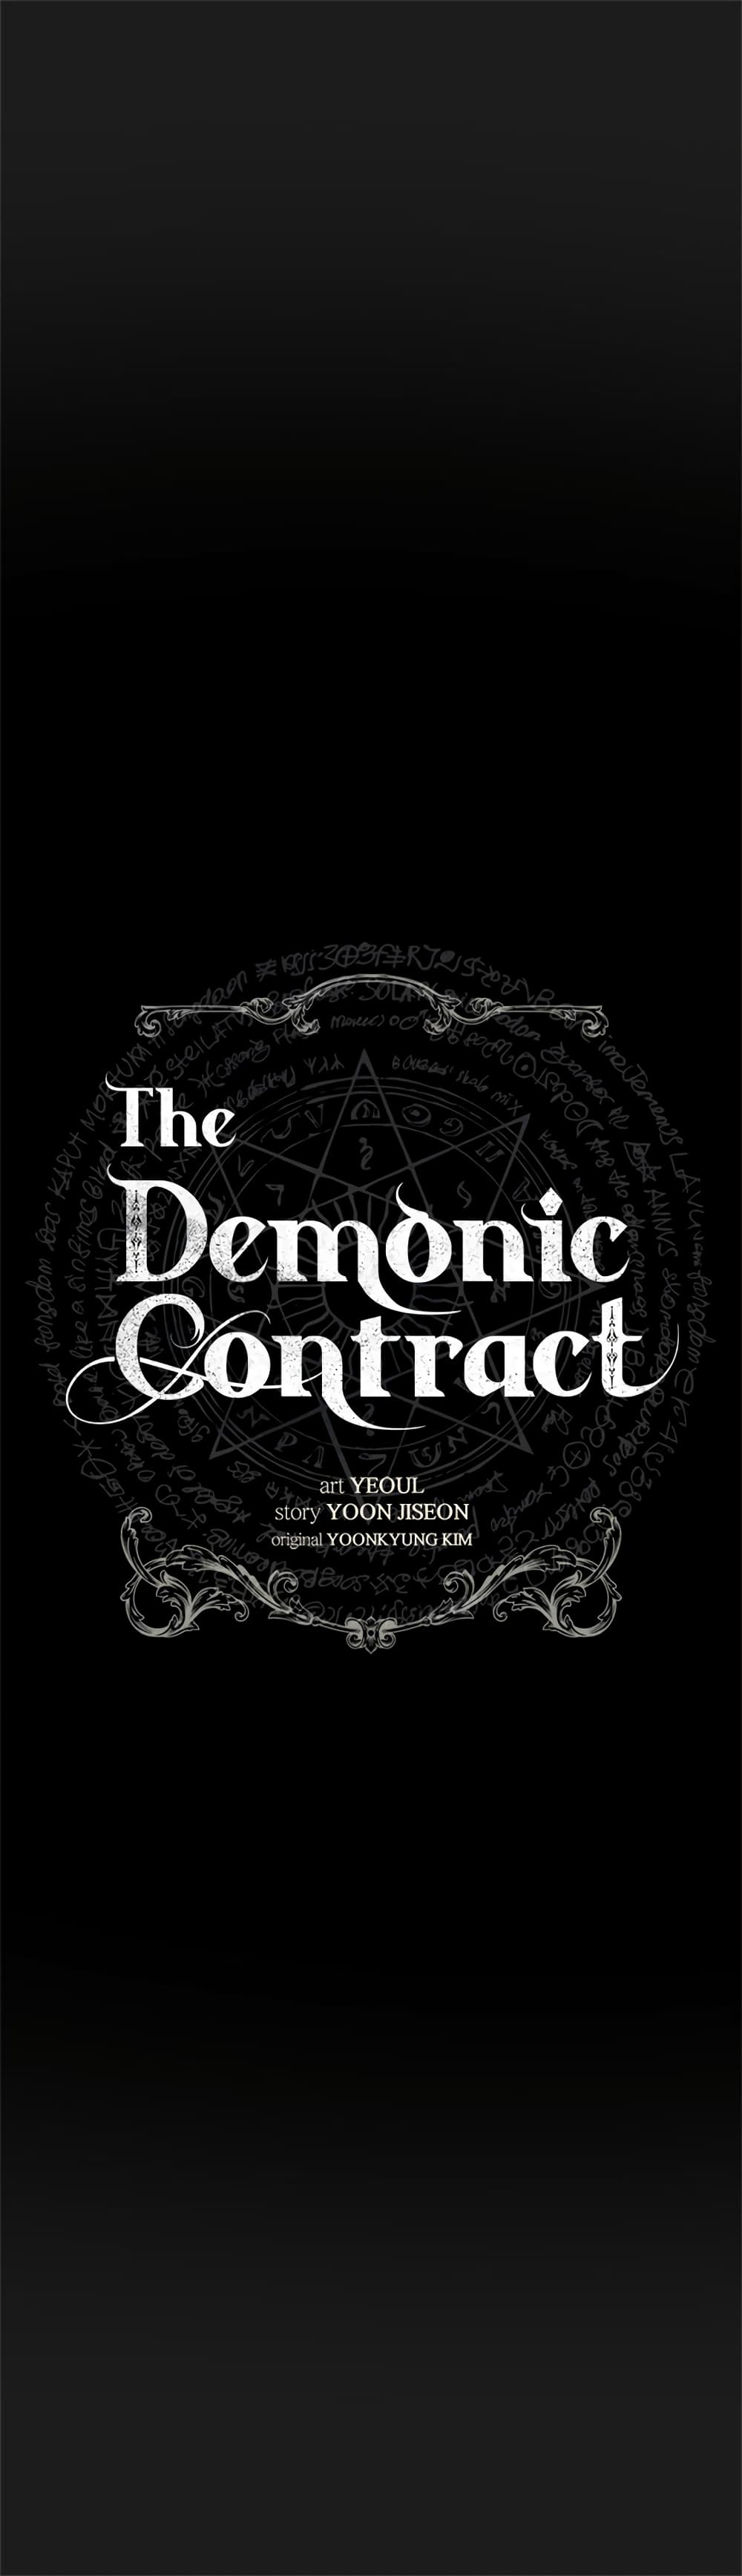 The Demonic Contract 38-38